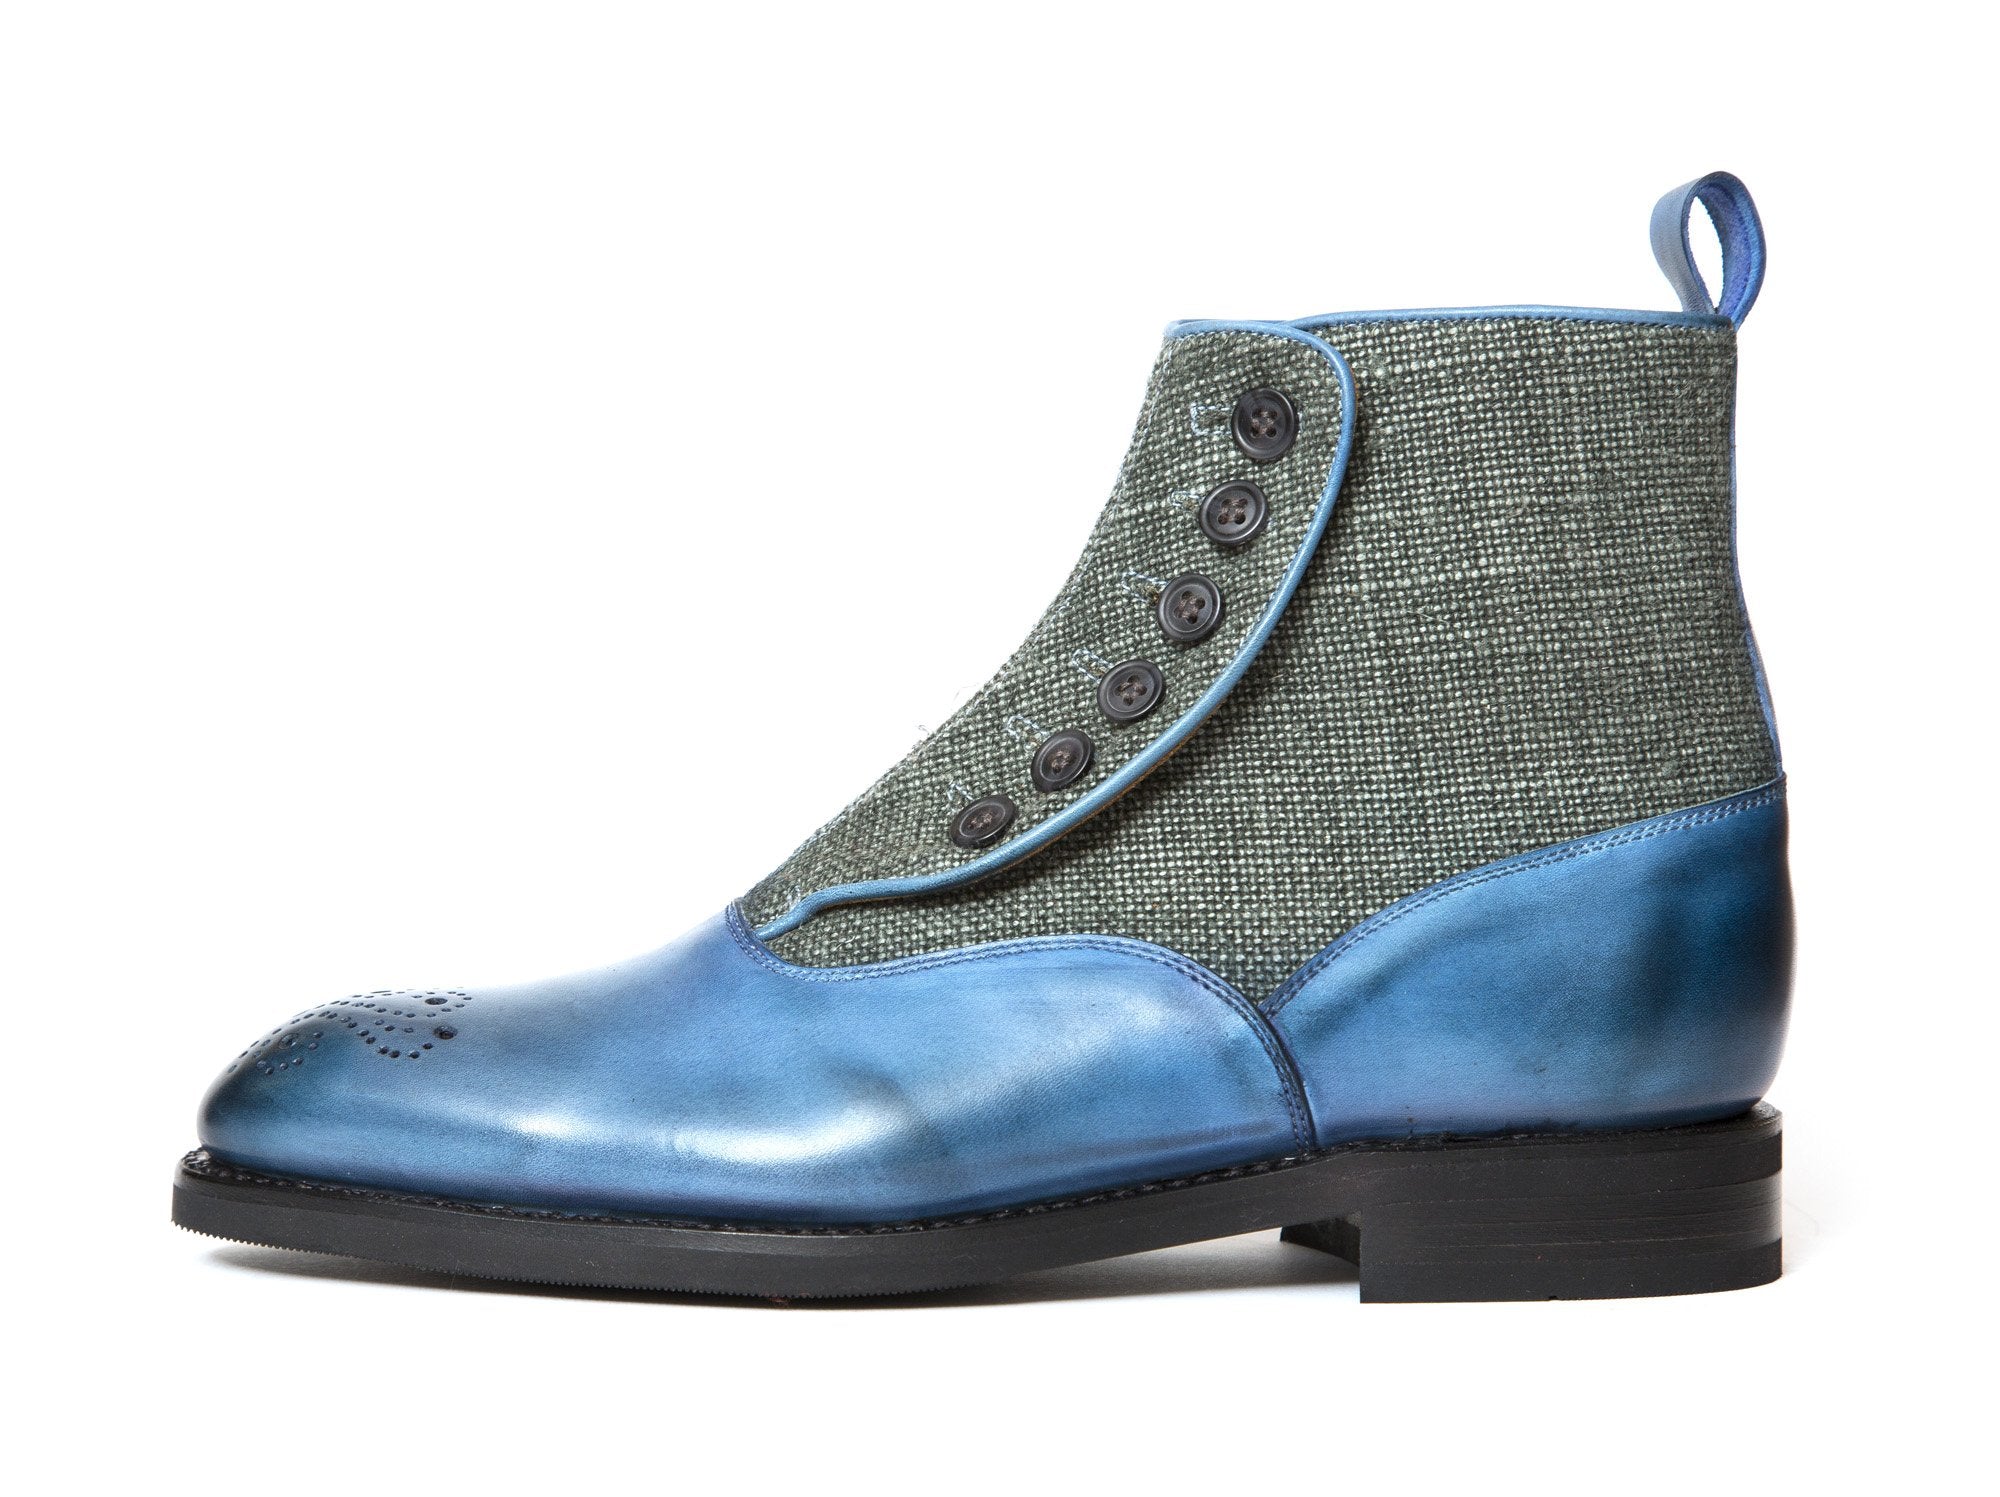 J.FitzPatrick Footwear - Westlake - Sky Blue Calf / Military Canvas - TMG Last - City Rubber Sole